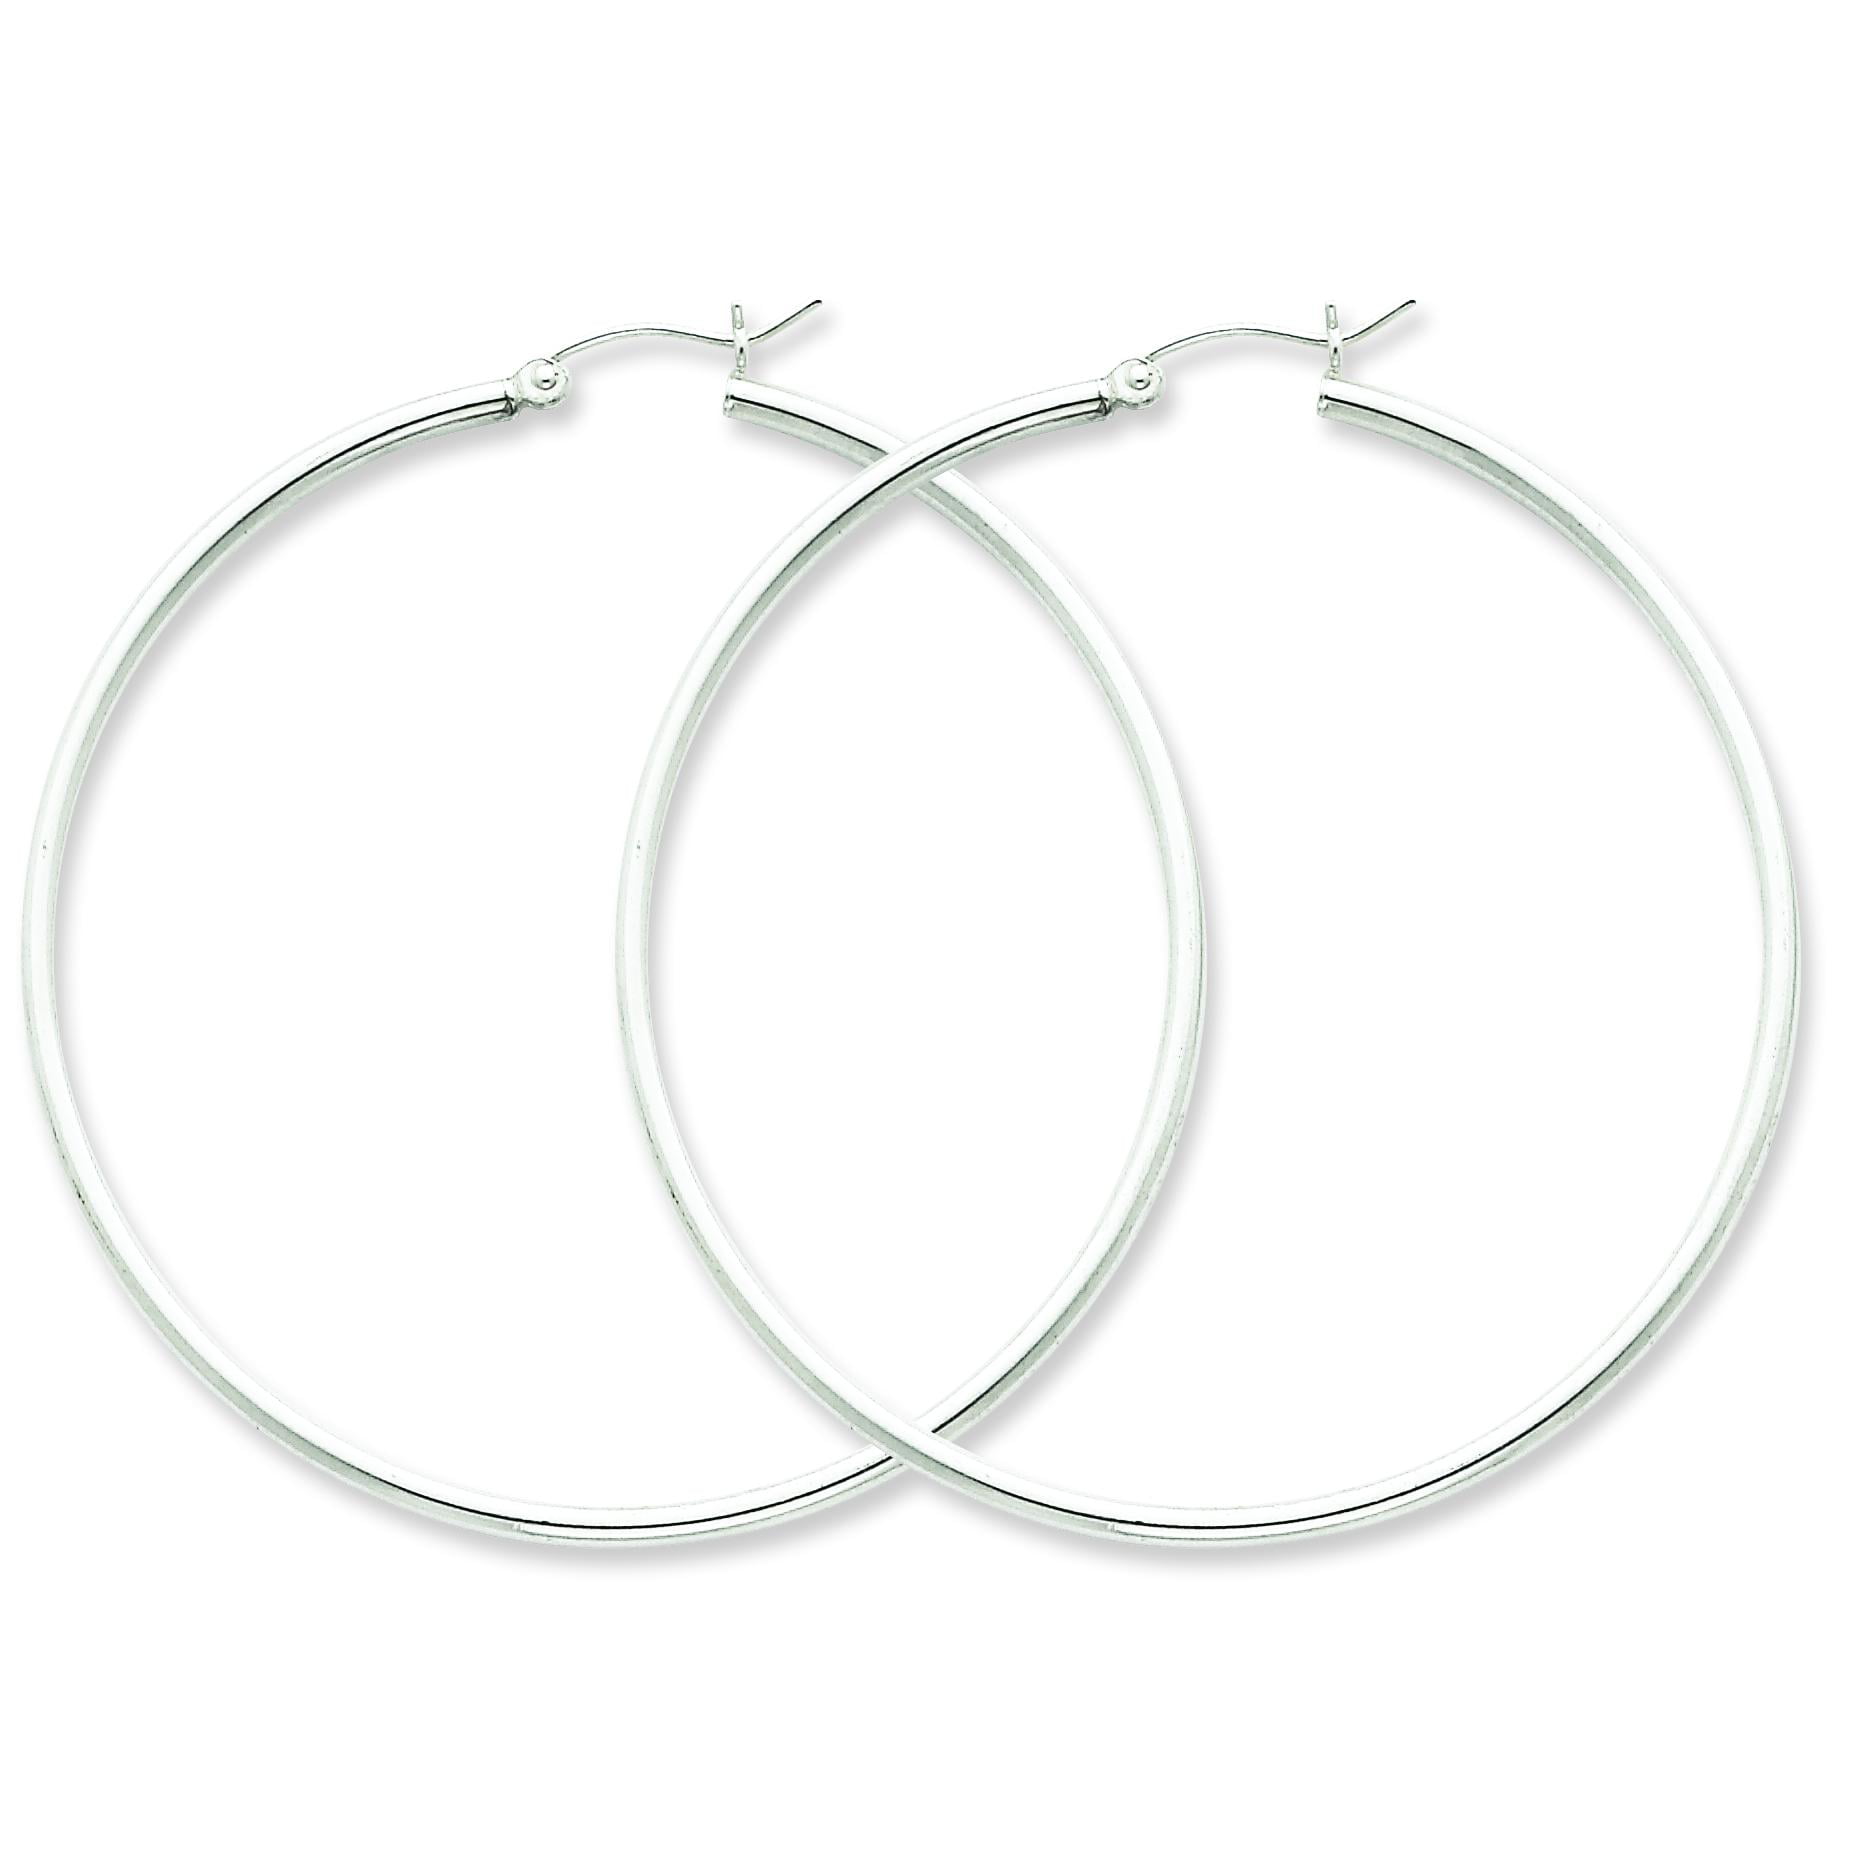 USA Seller Hoop Earrings Sterling Silver 925 Best Price Jewelry 1.5mm x 90mm 